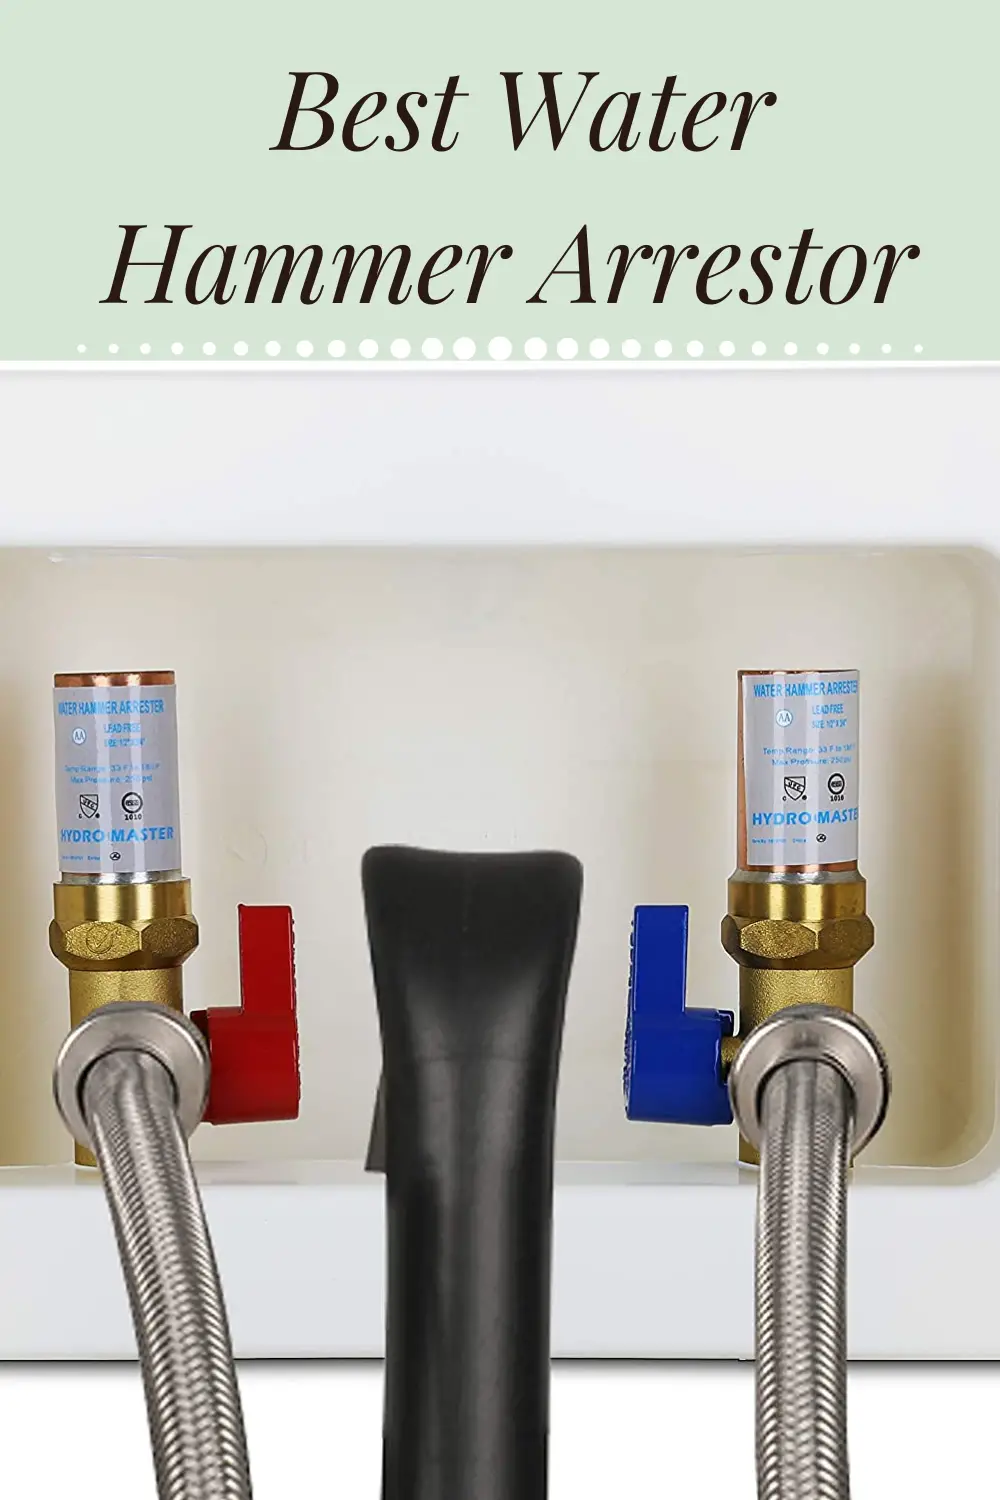 Best Water Hammer Arrestor